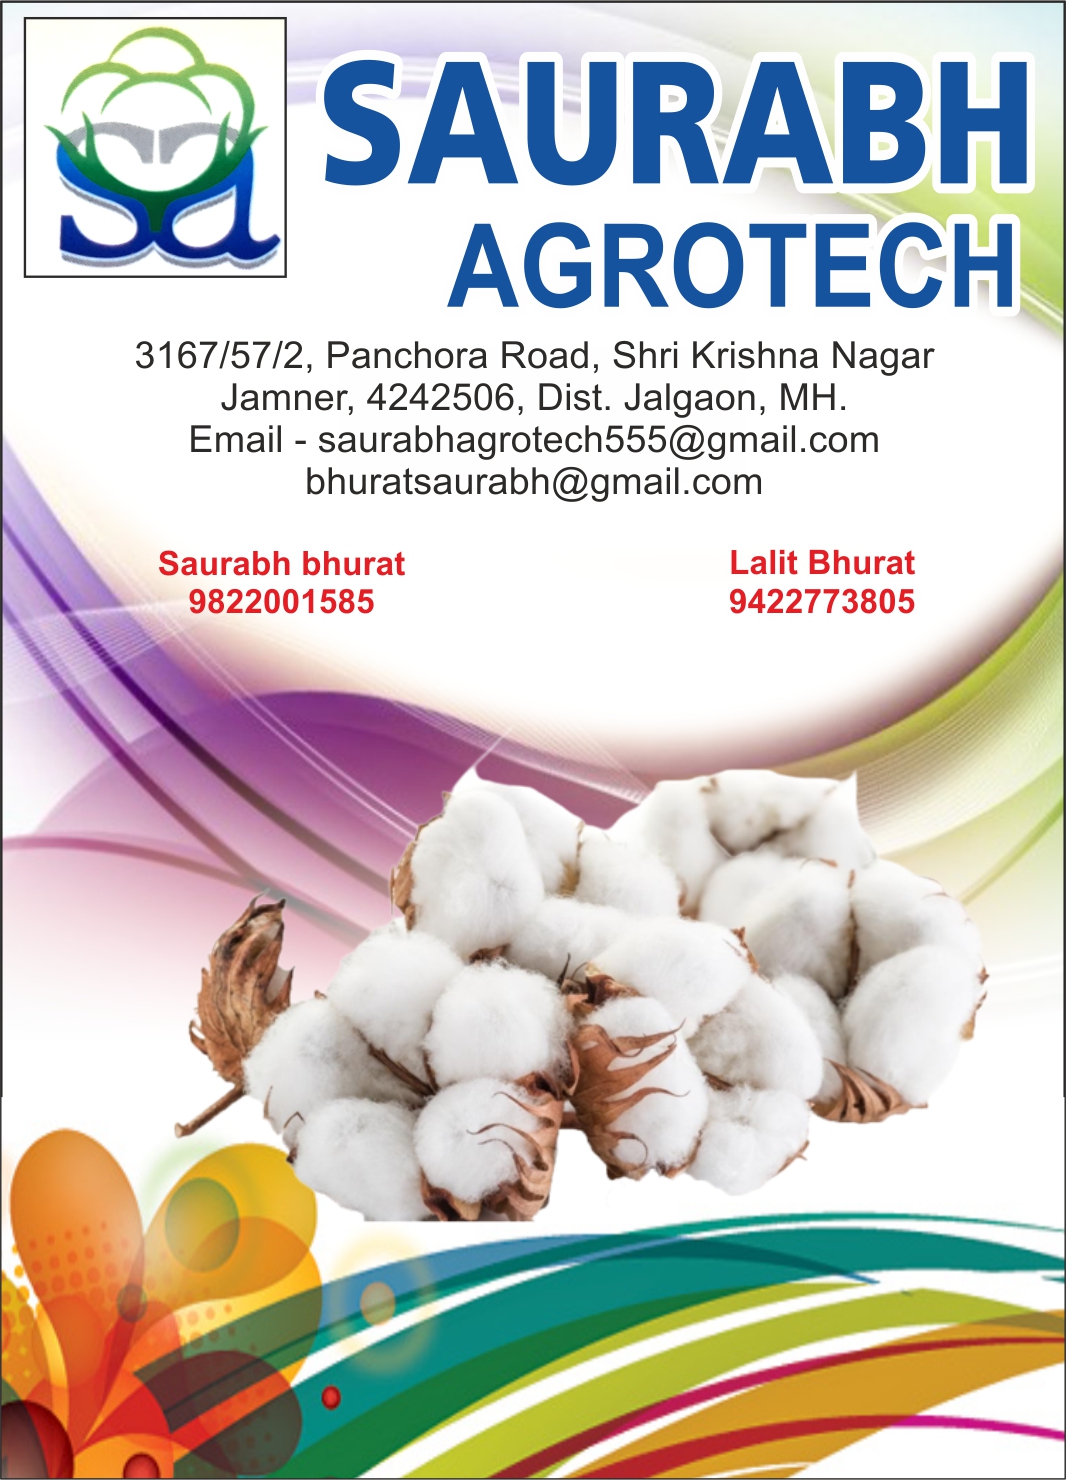 Saurabh Agrotech